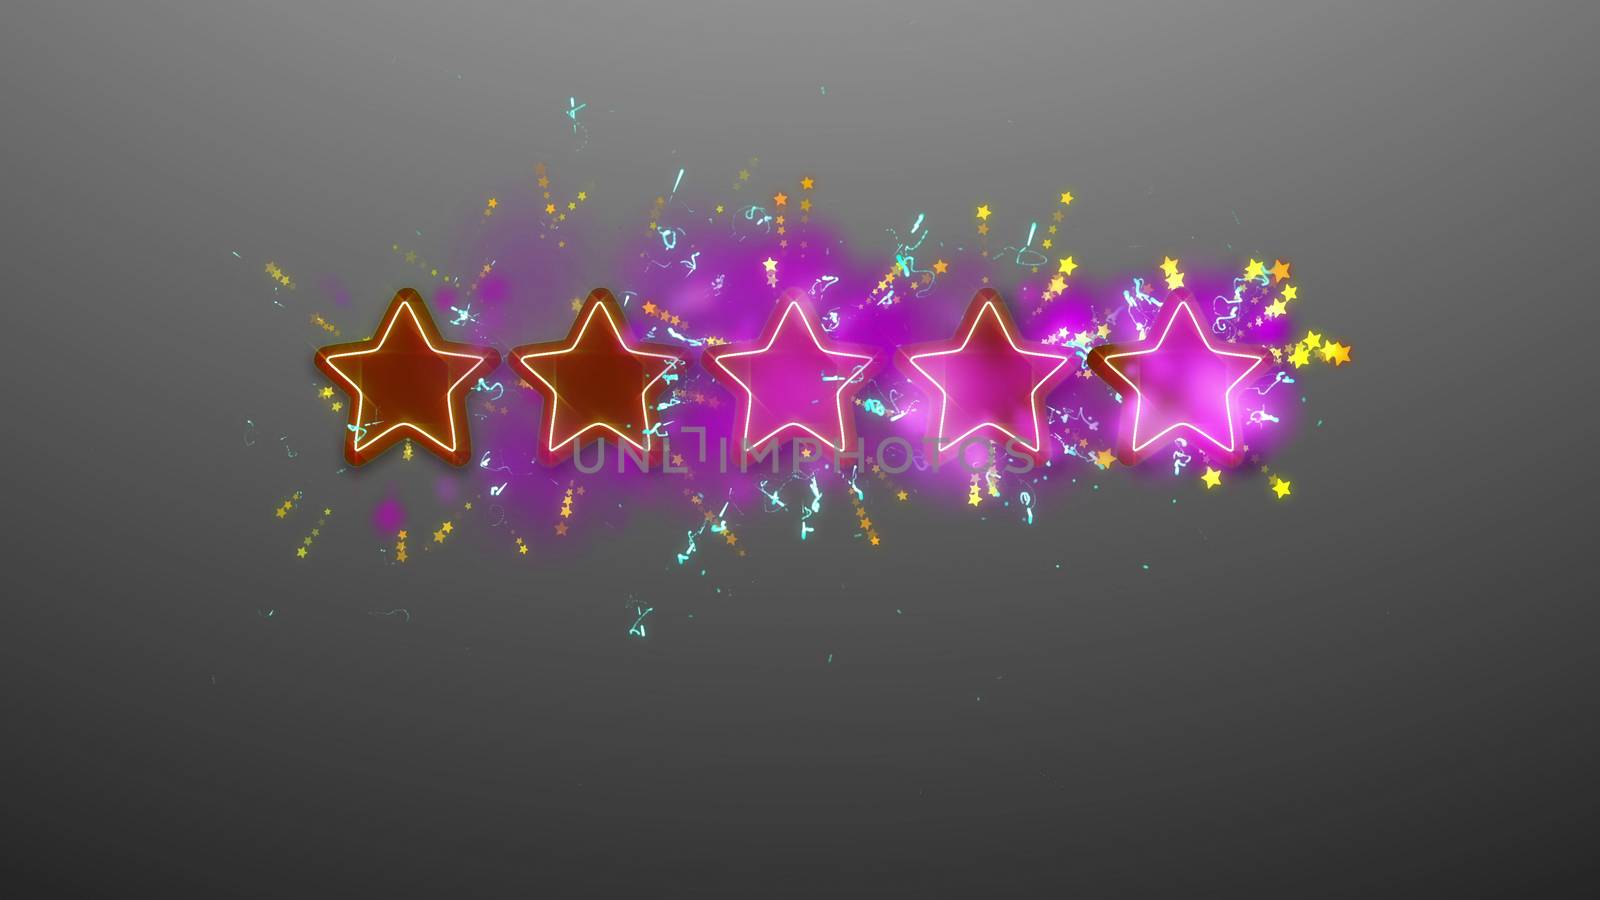 Star rating illustration with golden sparkles by klss